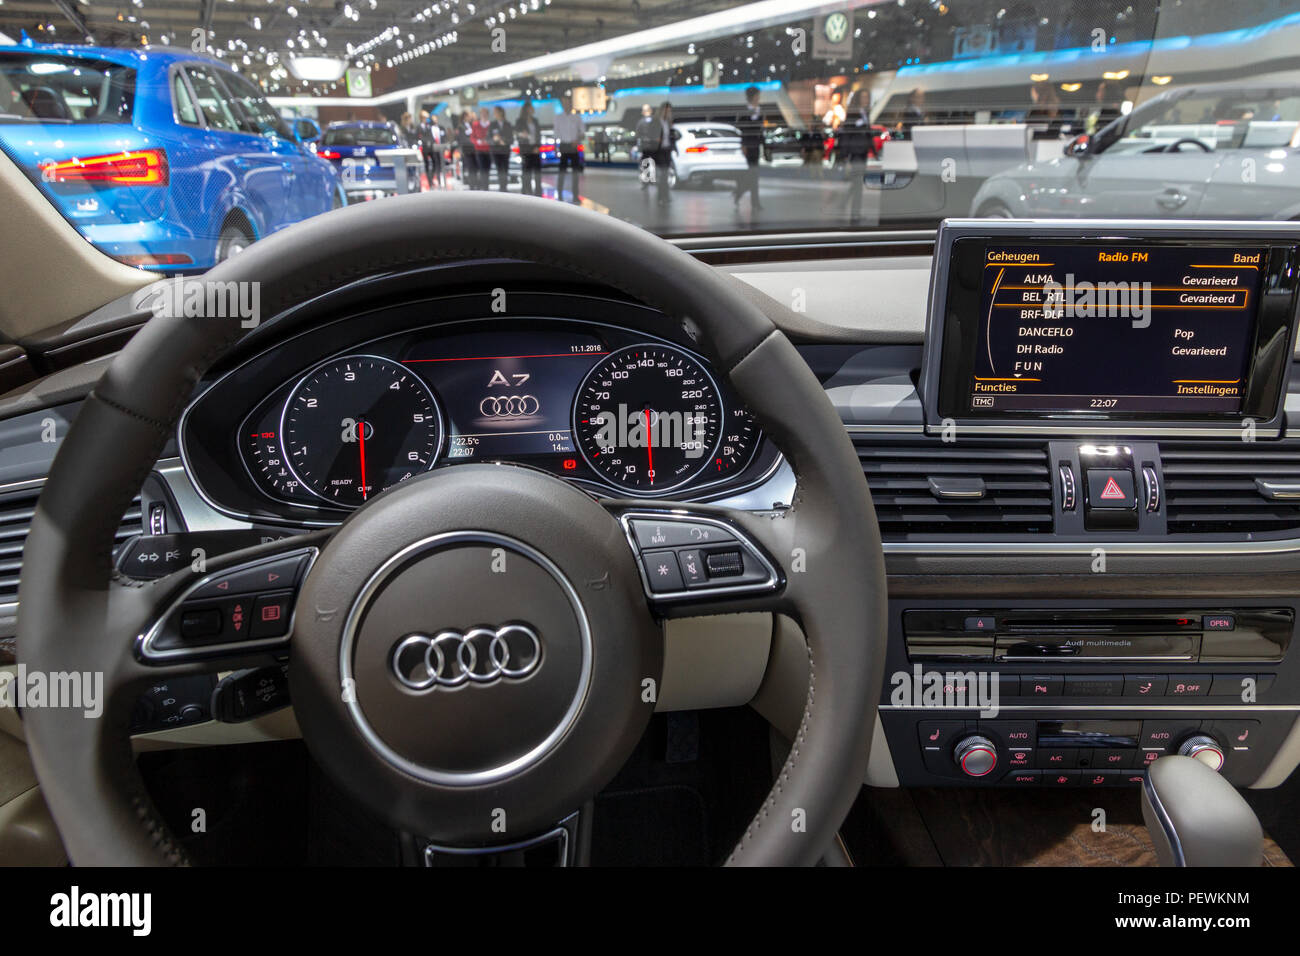 Brüssel - Jan 12, 2016: Innenraum Armaturenbrett und Lenkrad der Audi A7  Auto auf dem Automobil-Salon in Brüssel Stockfotografie - Alamy